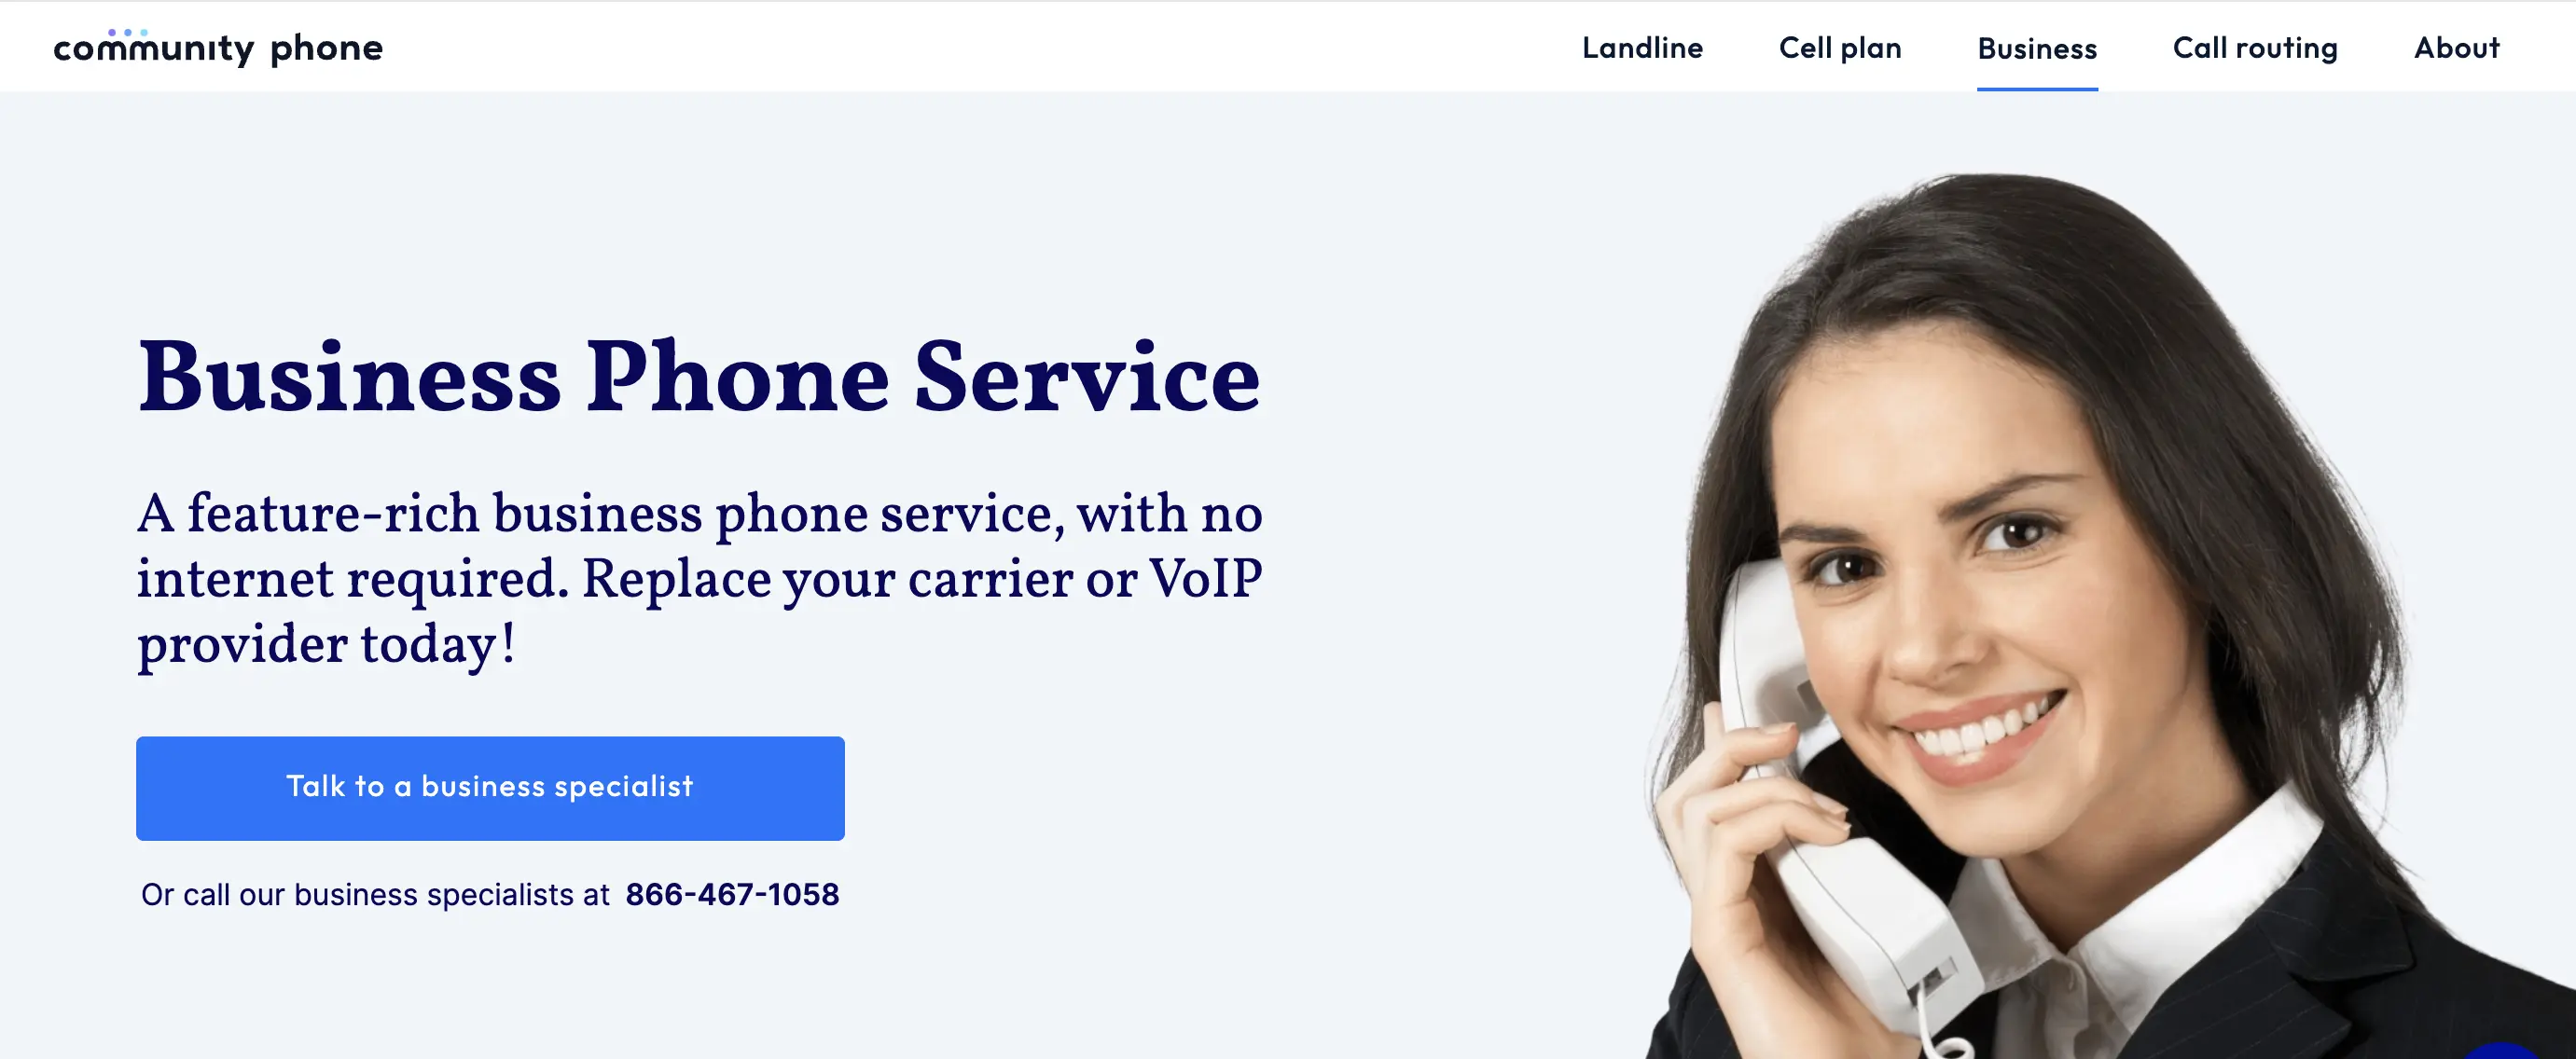 Community Phone's Hotel Phone Service